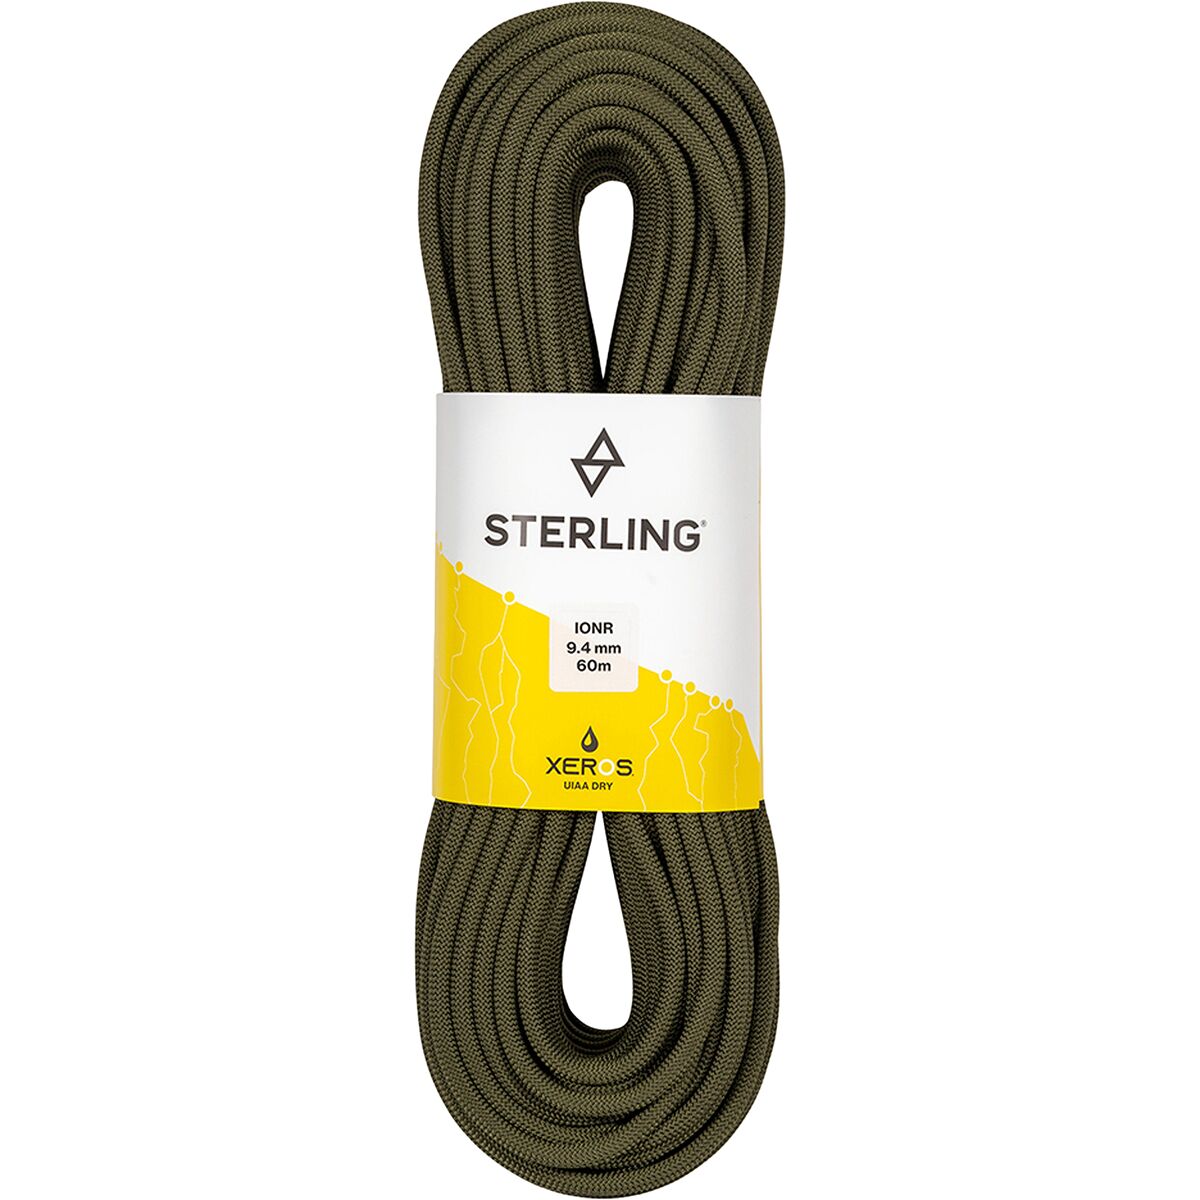 Sterling IonR 9.4 XEROS Rope